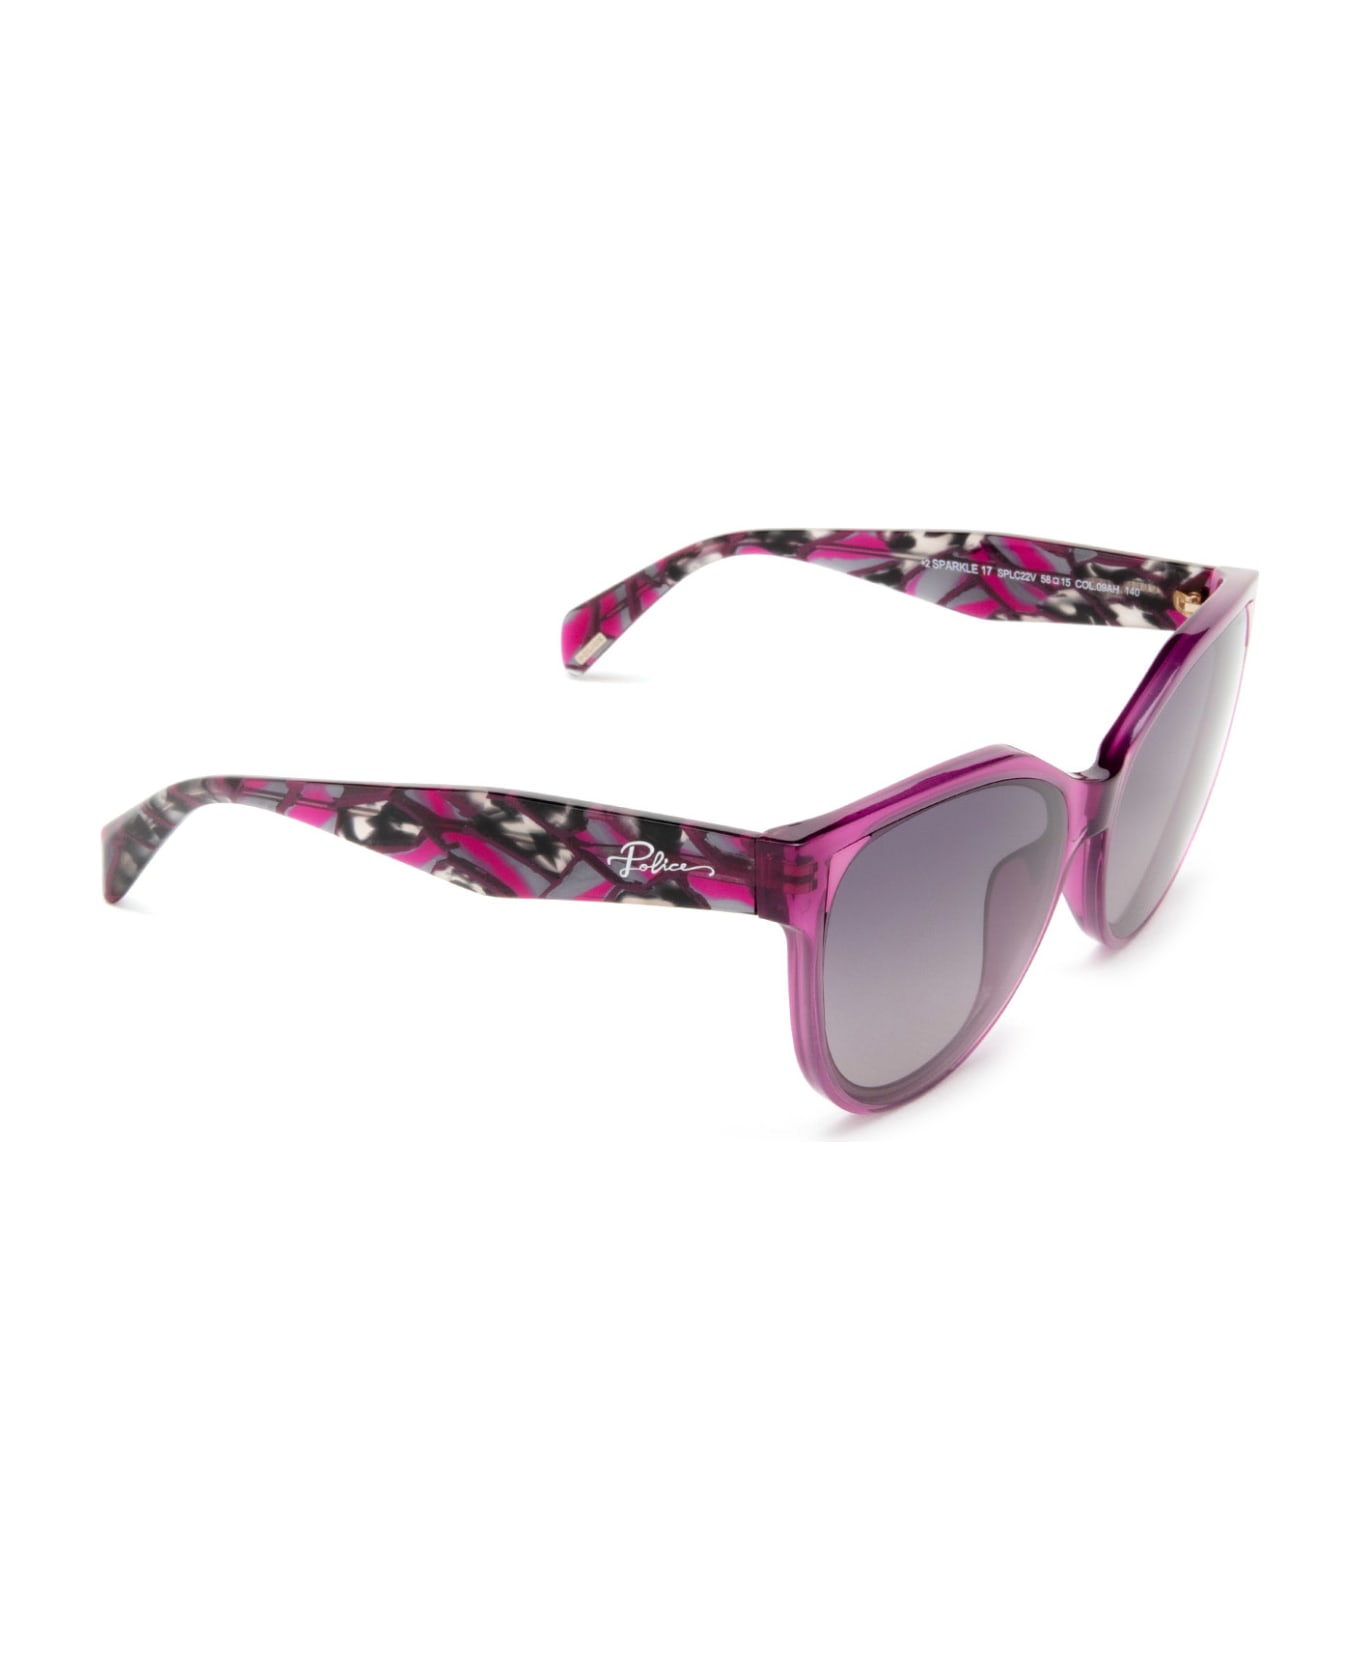 Police Splc22e Transparent Pink Sunglasses Jewelry - Transparent Pink